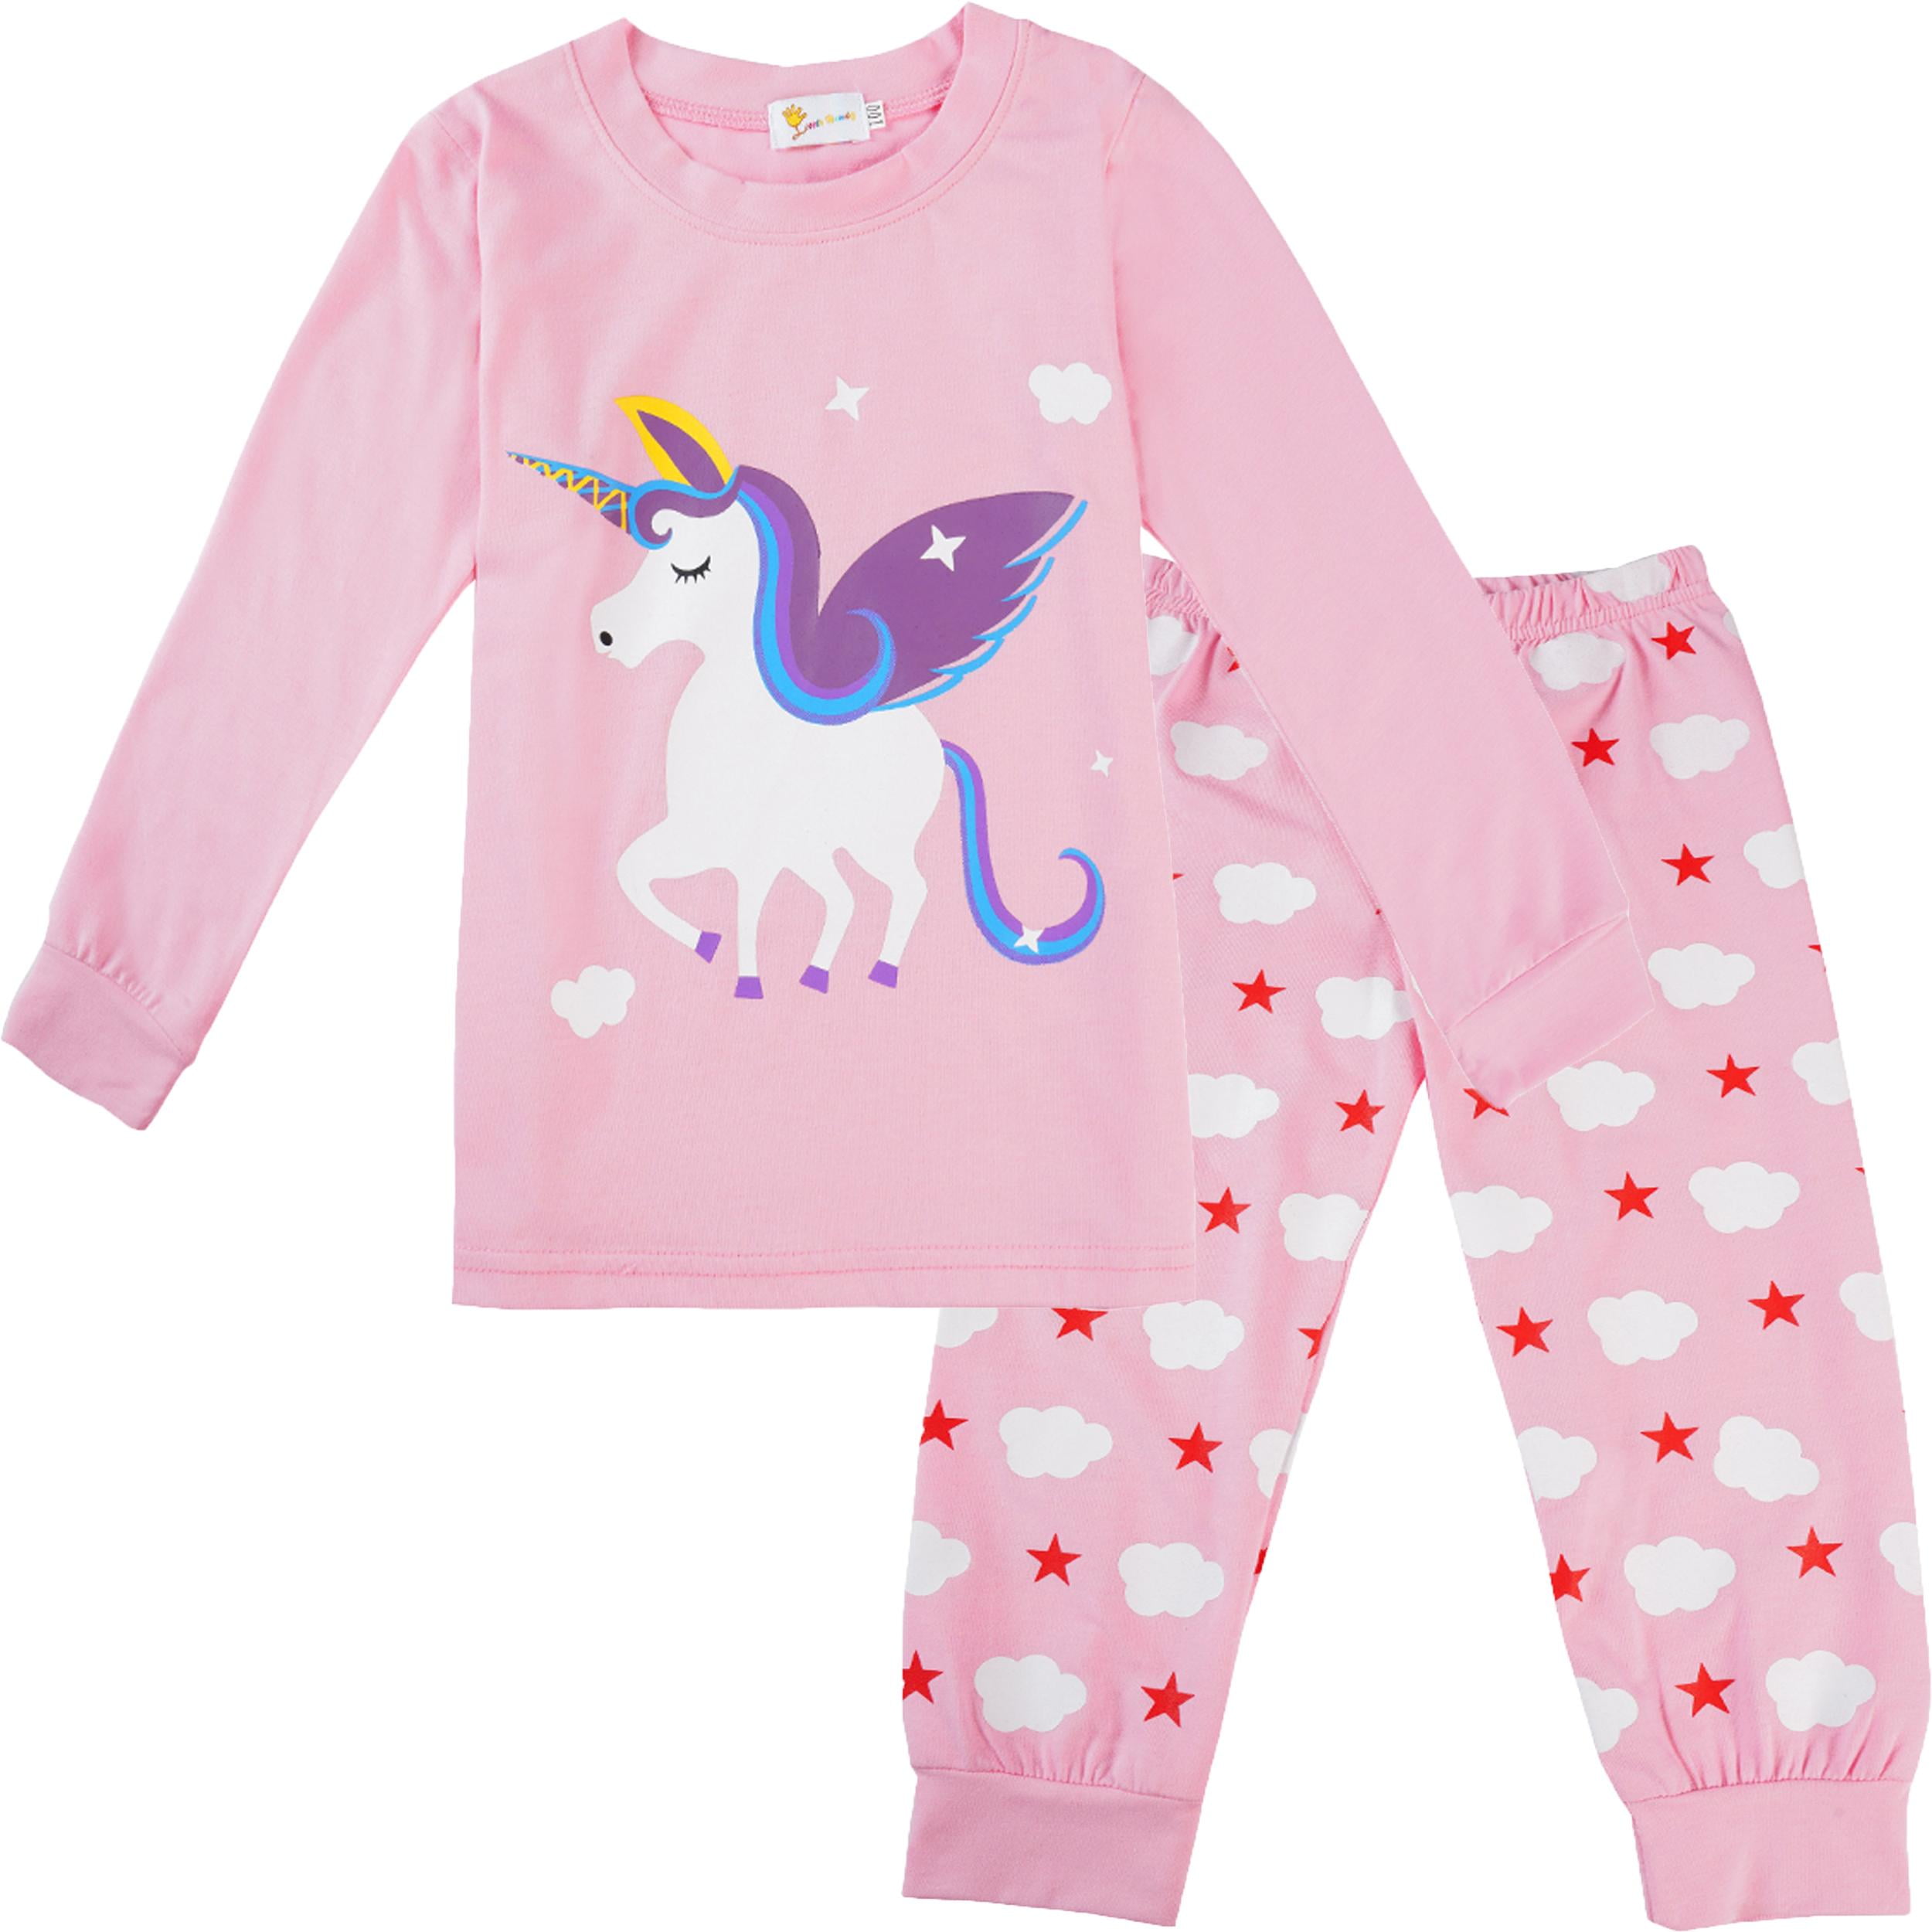 Little Hand Toddler Girls Pajamas Sets Ladybug 100% Cotton Flamingo Unicorn Pjs Jammies Long Sleeve Kids Sleepwear for Size 2-7 T